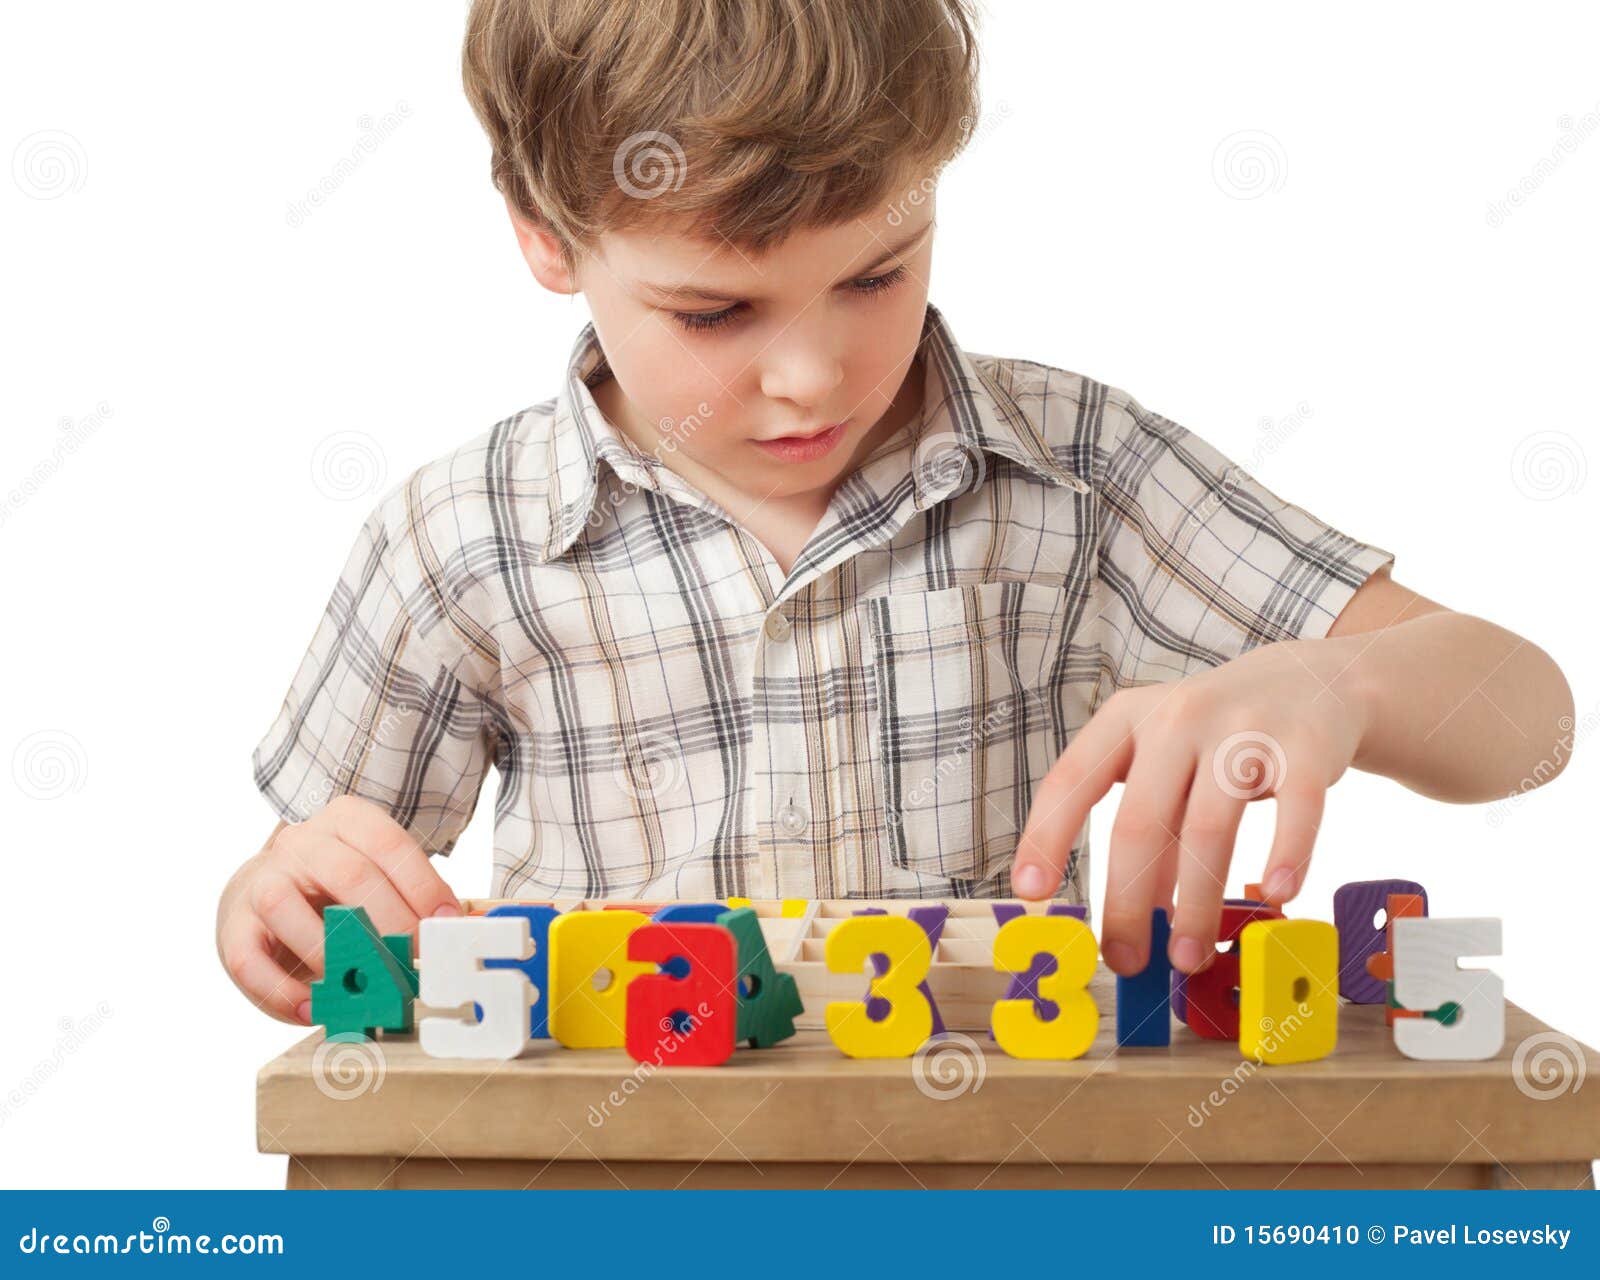 boy displays wooden figures in form of numerals